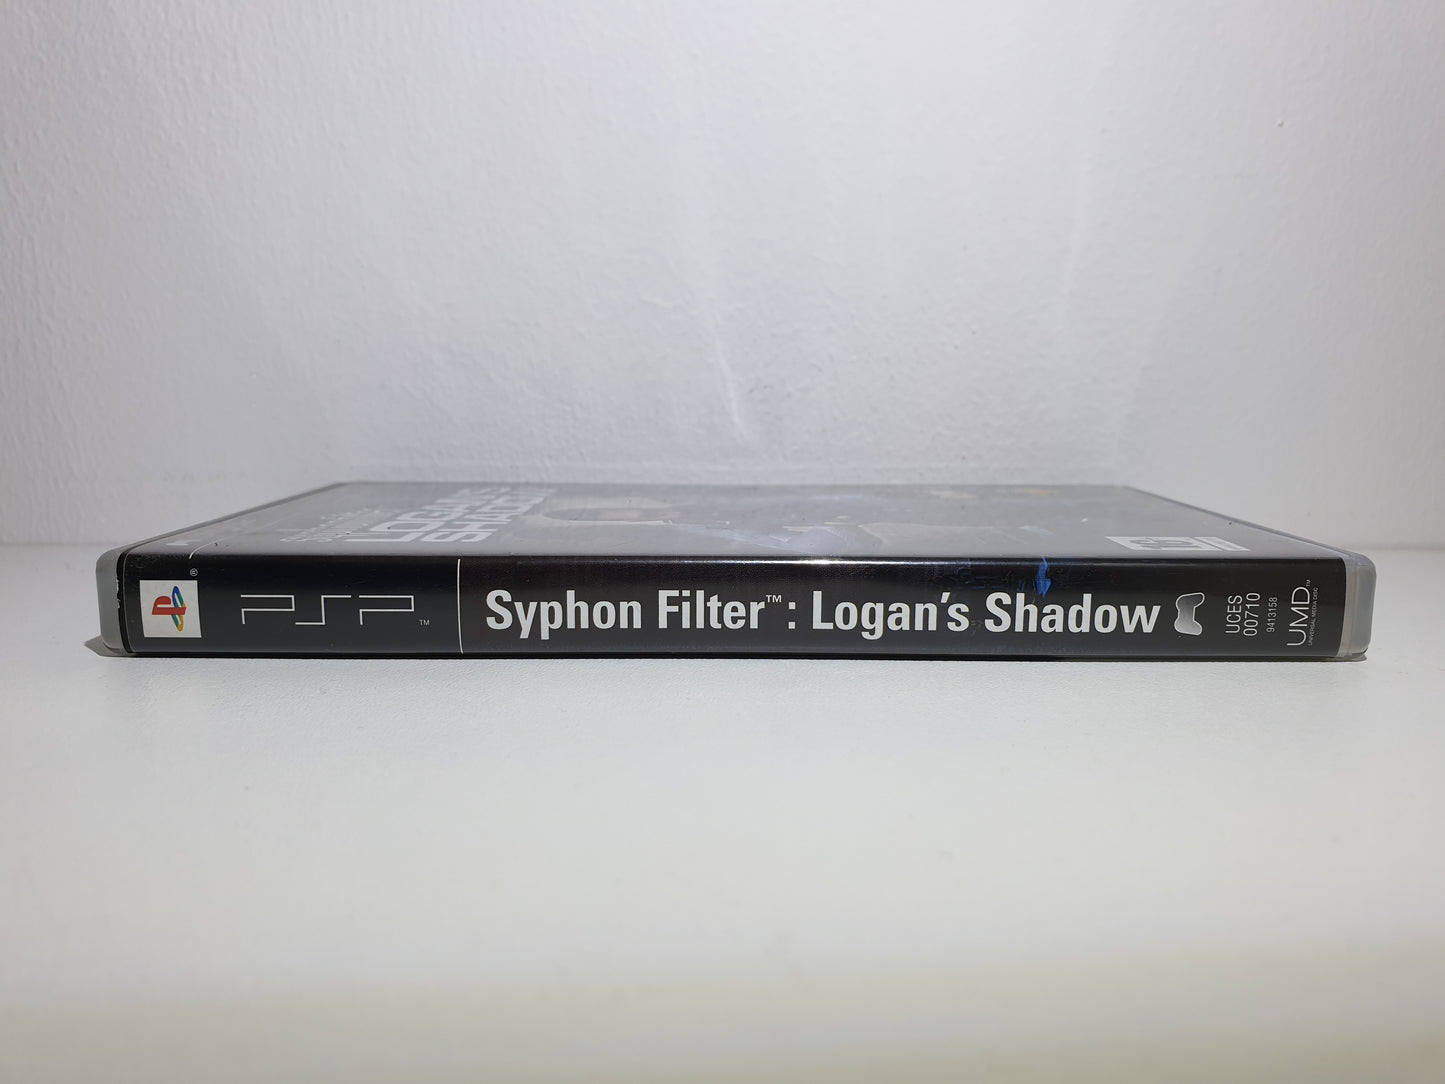 Syphon Filter : Logan's Shadow PSP - Occasion très bon état